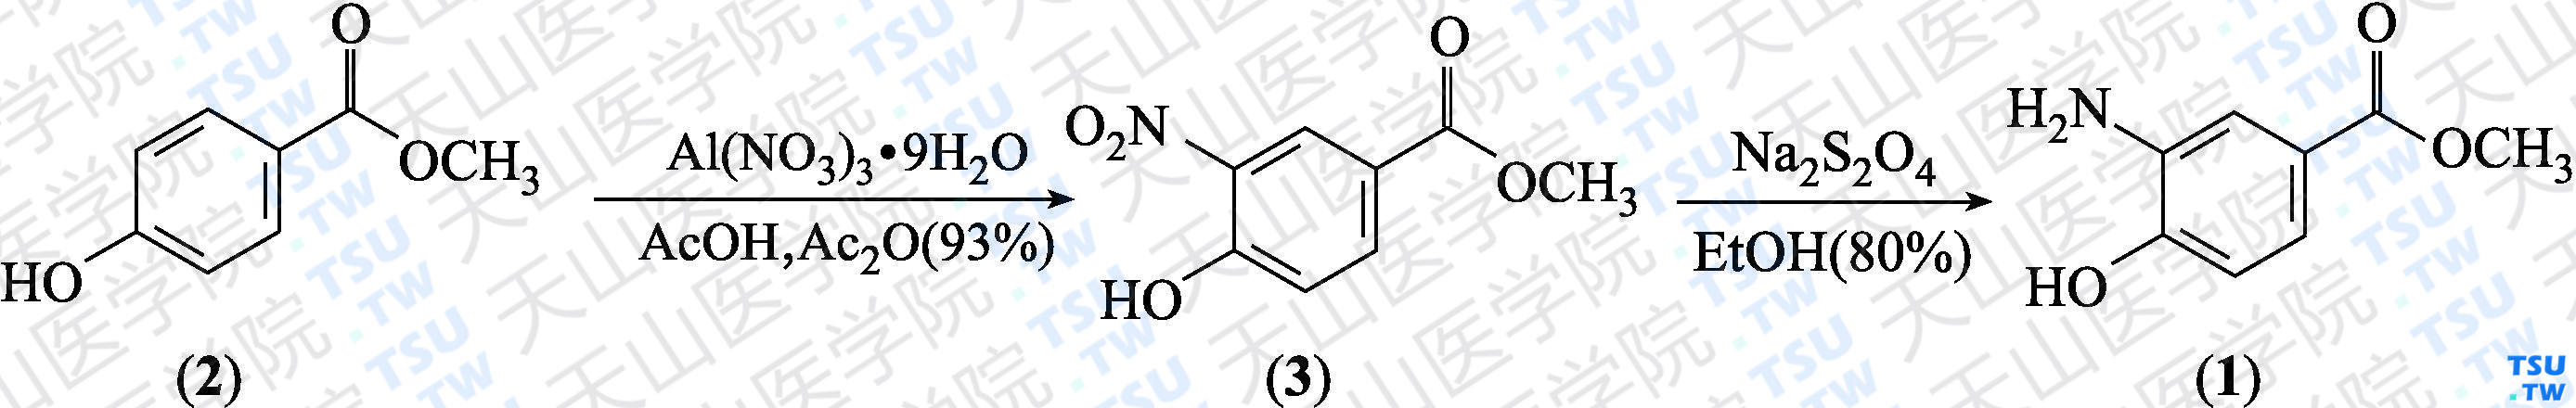 3-氨基-4-羟基苯甲酸甲酯（分子式：C<sub>8</sub>H<sub>9</sub>NO<sub>3</sub>）的合成方法路线及其结构式